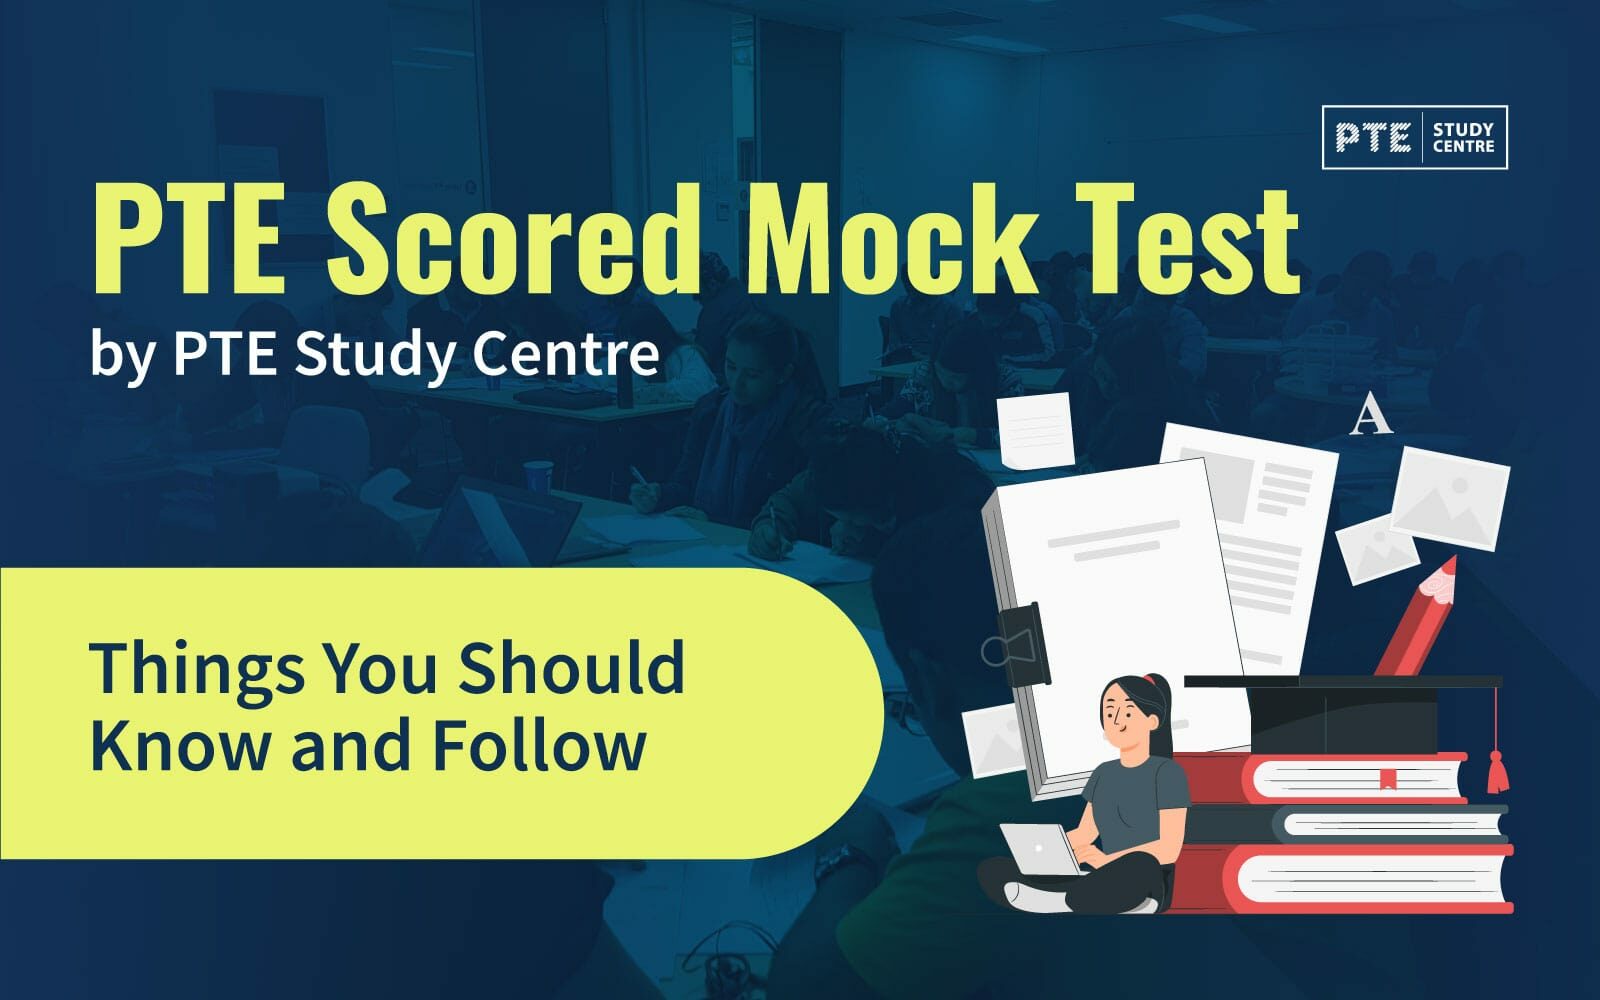 PTE Scored Mock Test by PTE Study Centre